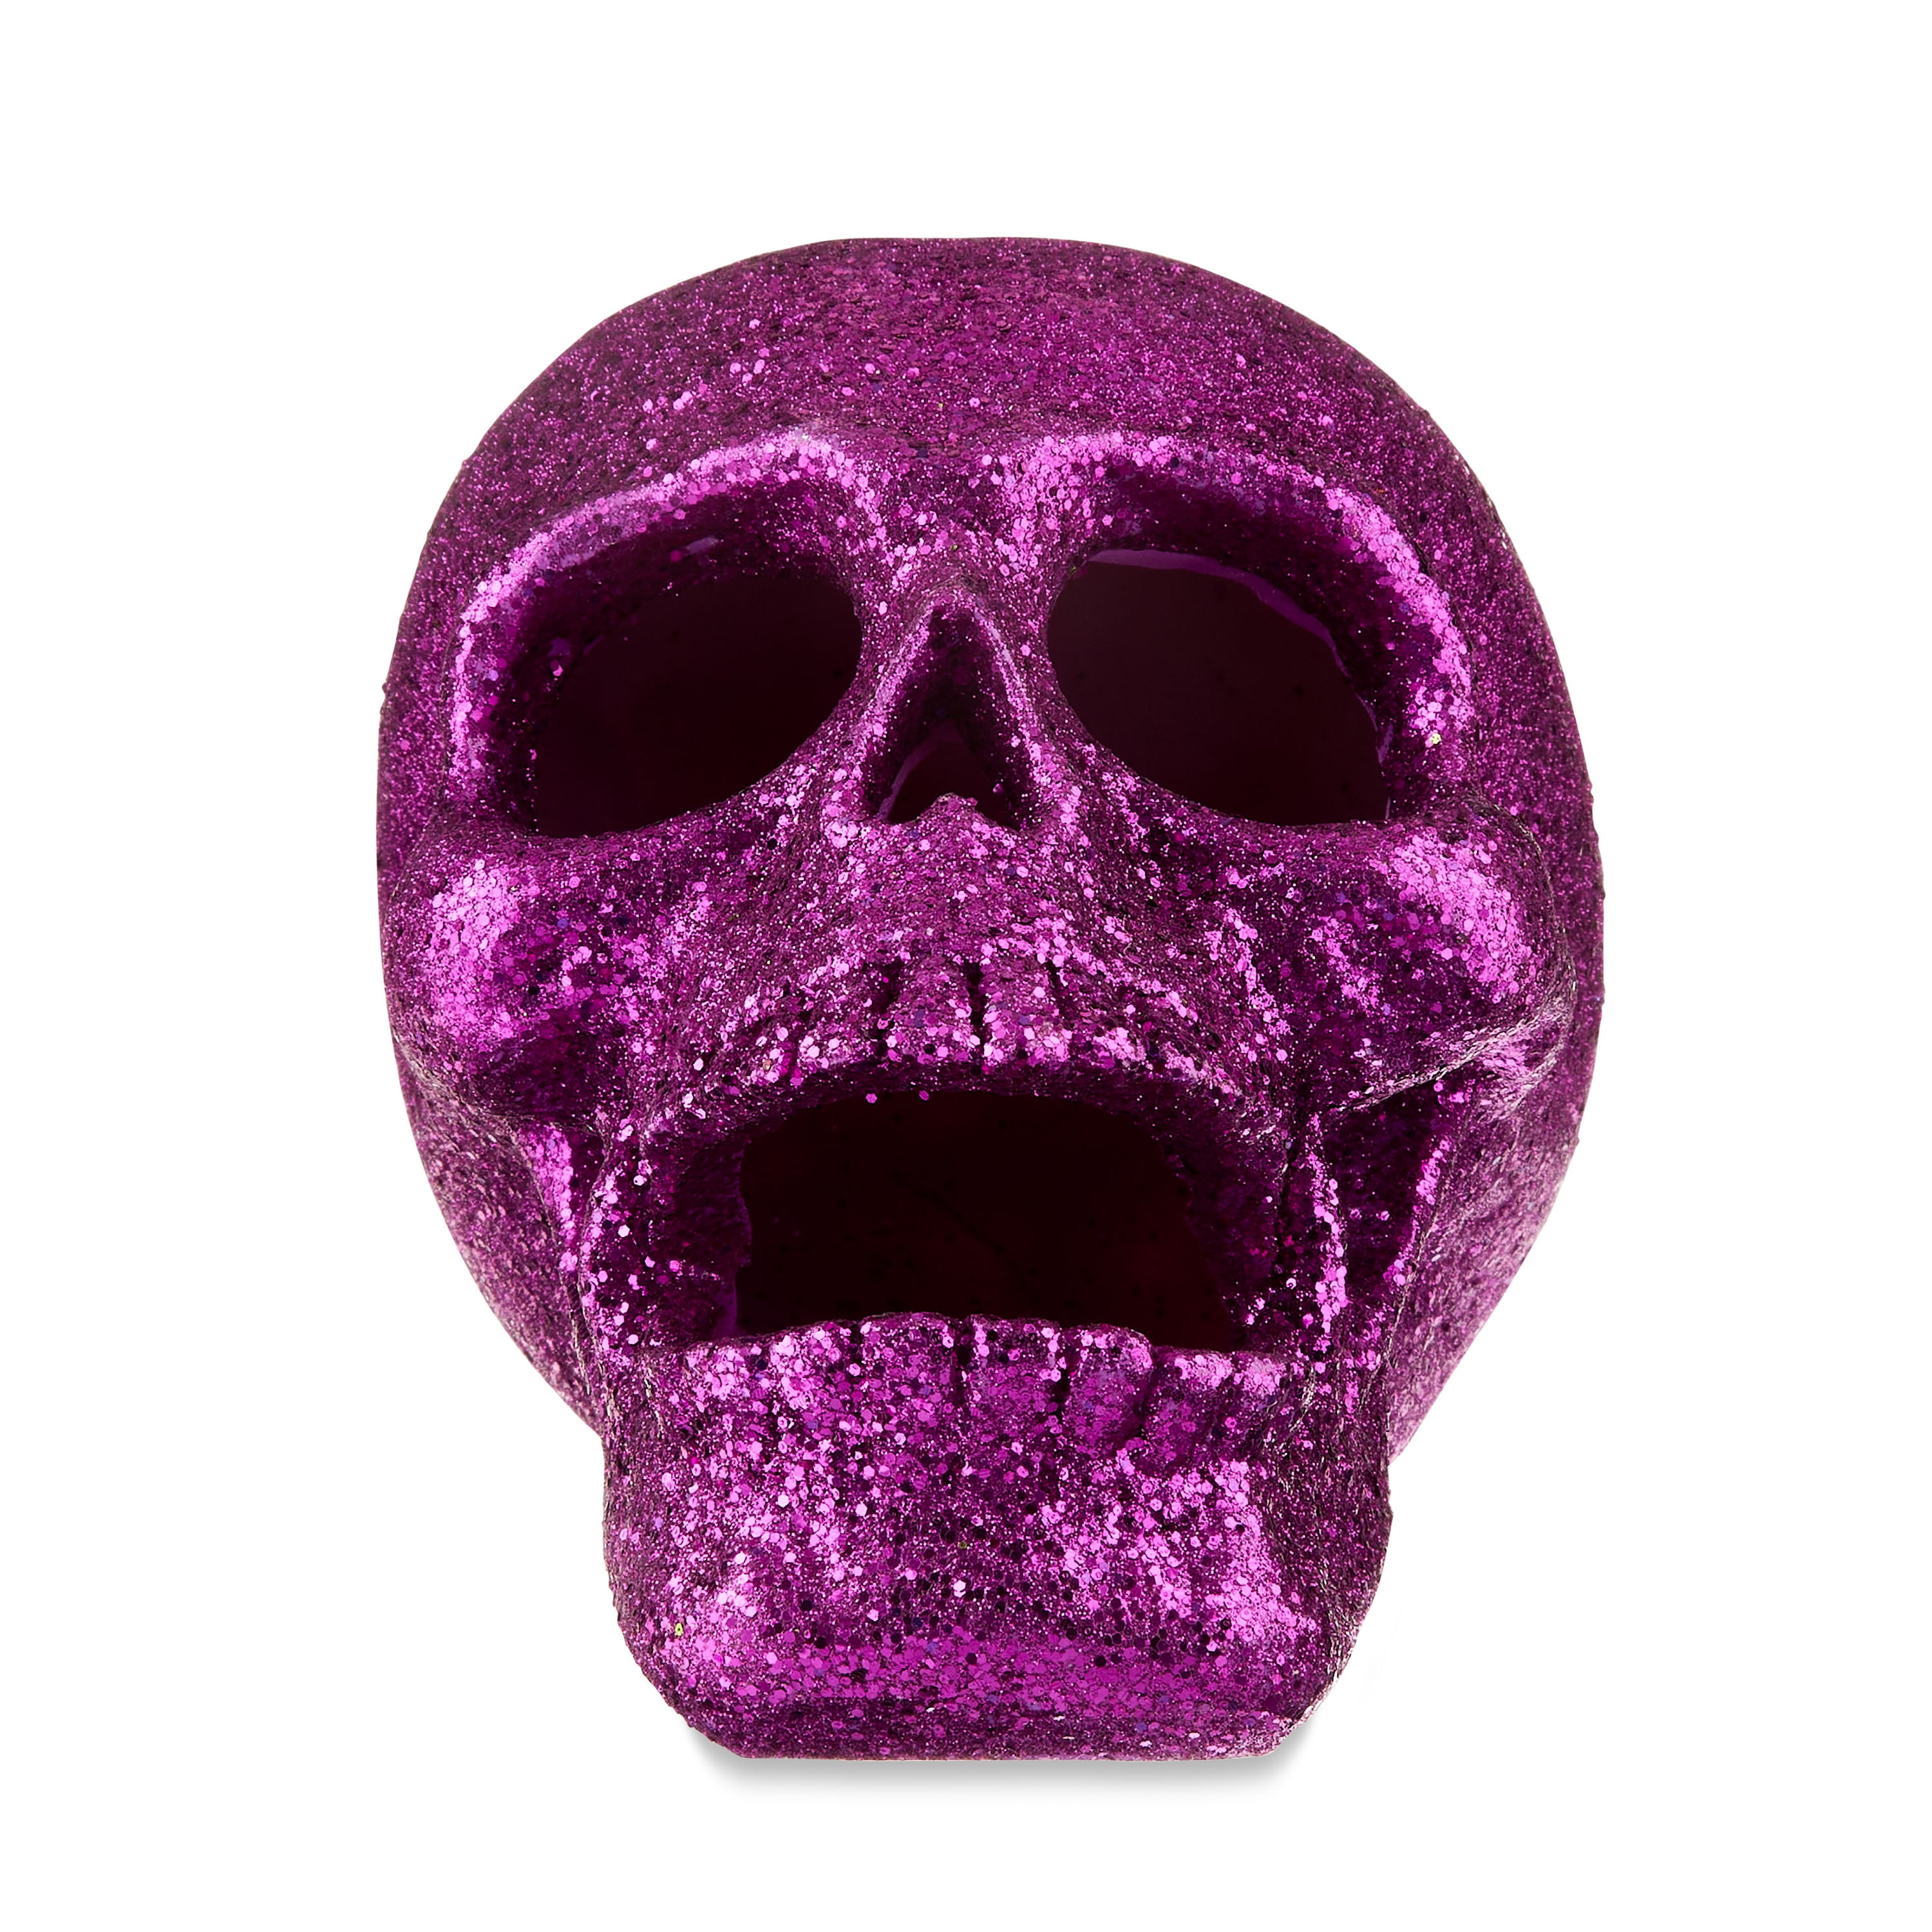 Halloween Large Purple Glittered Resin Skull Decoration, 5.25 in x